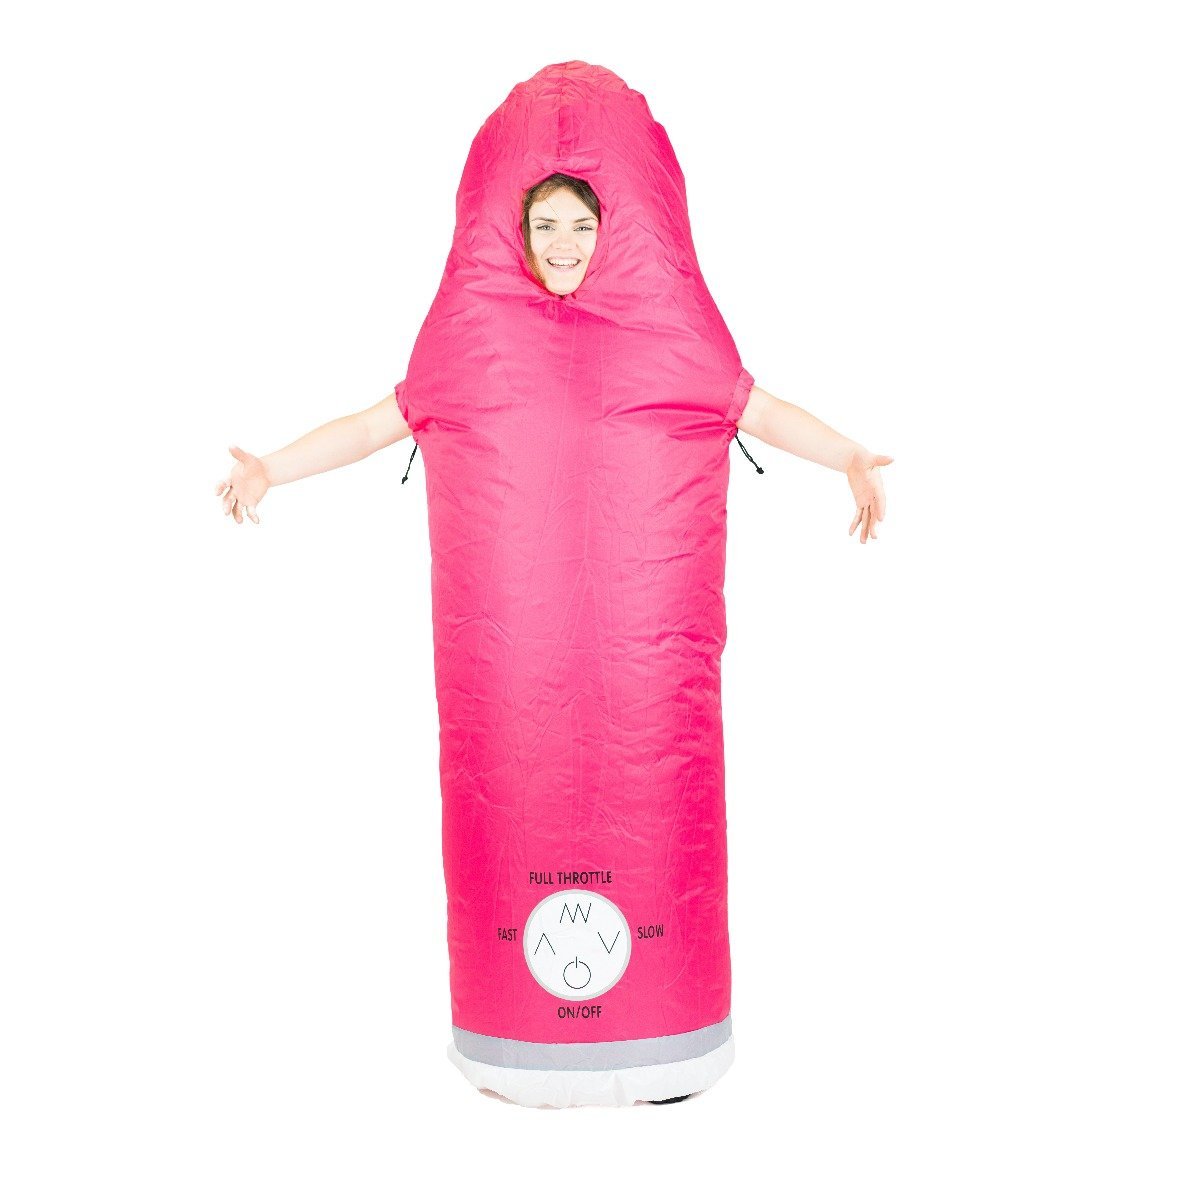 Bodysocks - Inflatable Dildo Costume